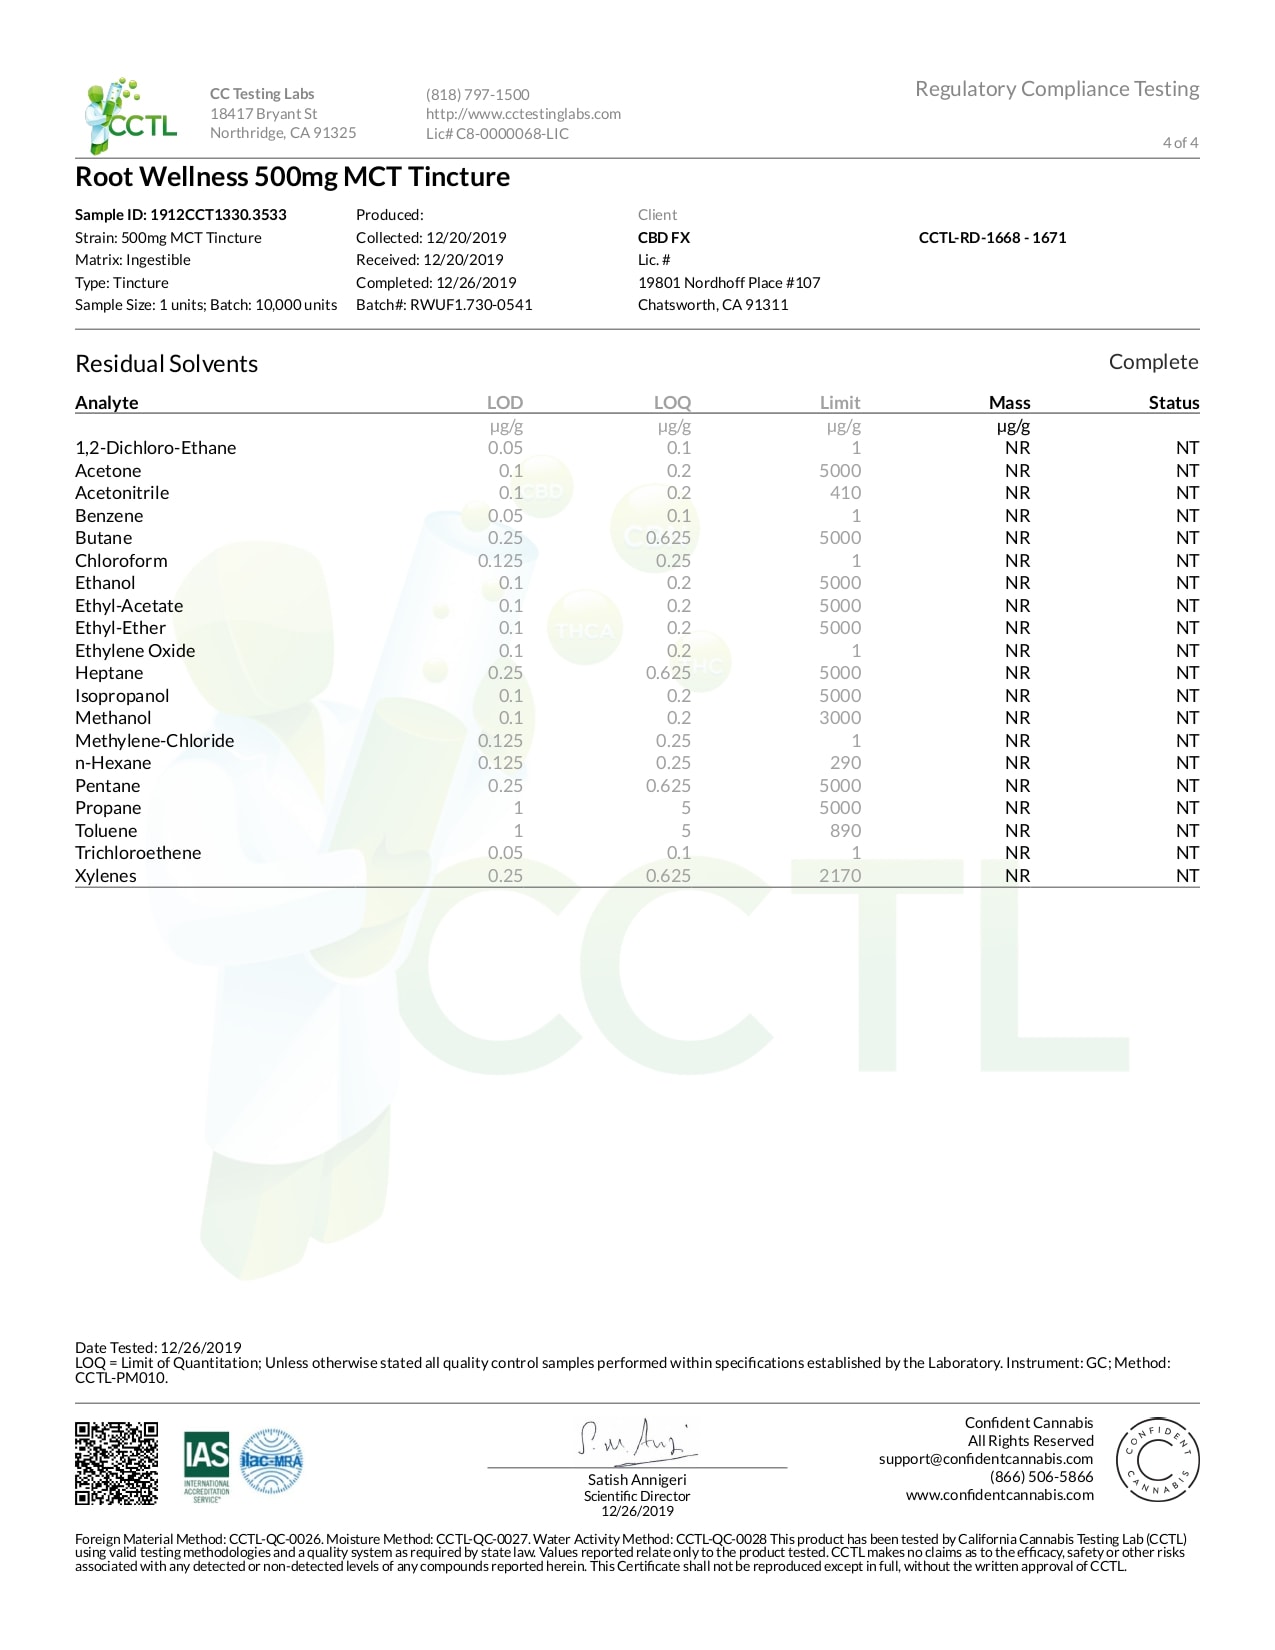 Root Wellness Raw CBD Tincture Lab Report Full Spectrum 500mg